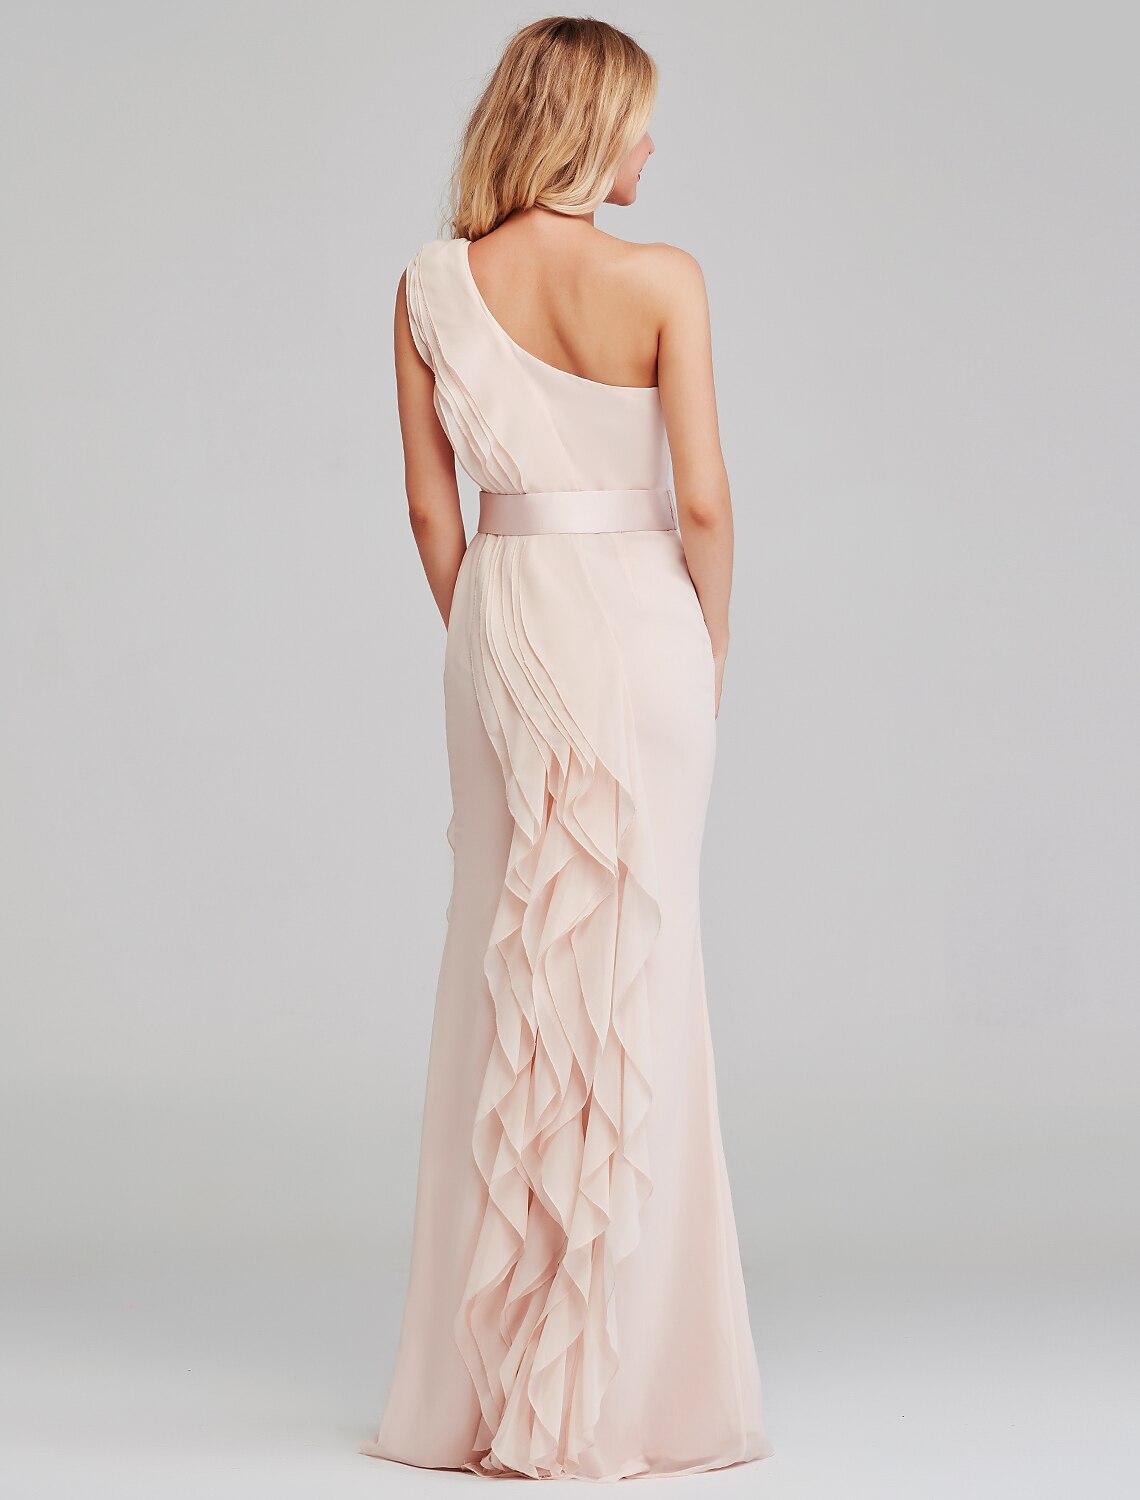 Sheath / Column Bridesmaid Dress One Shoulder Sleeveless Elegant Long Length Chiffon with Cascading Ruffles